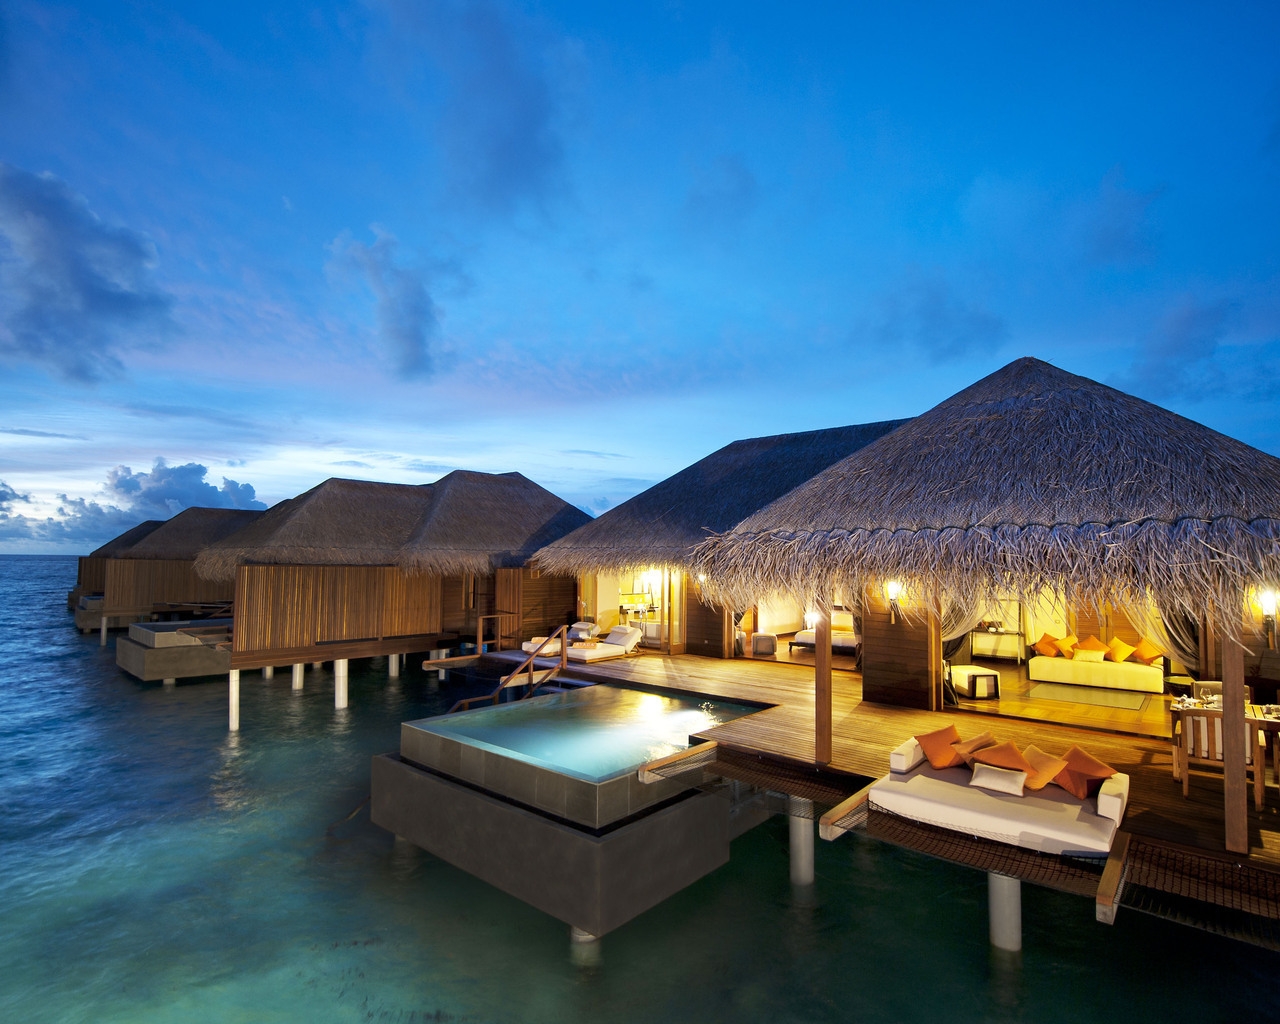 Maldives Ayada Hotel for 1280 x 1024 resolution